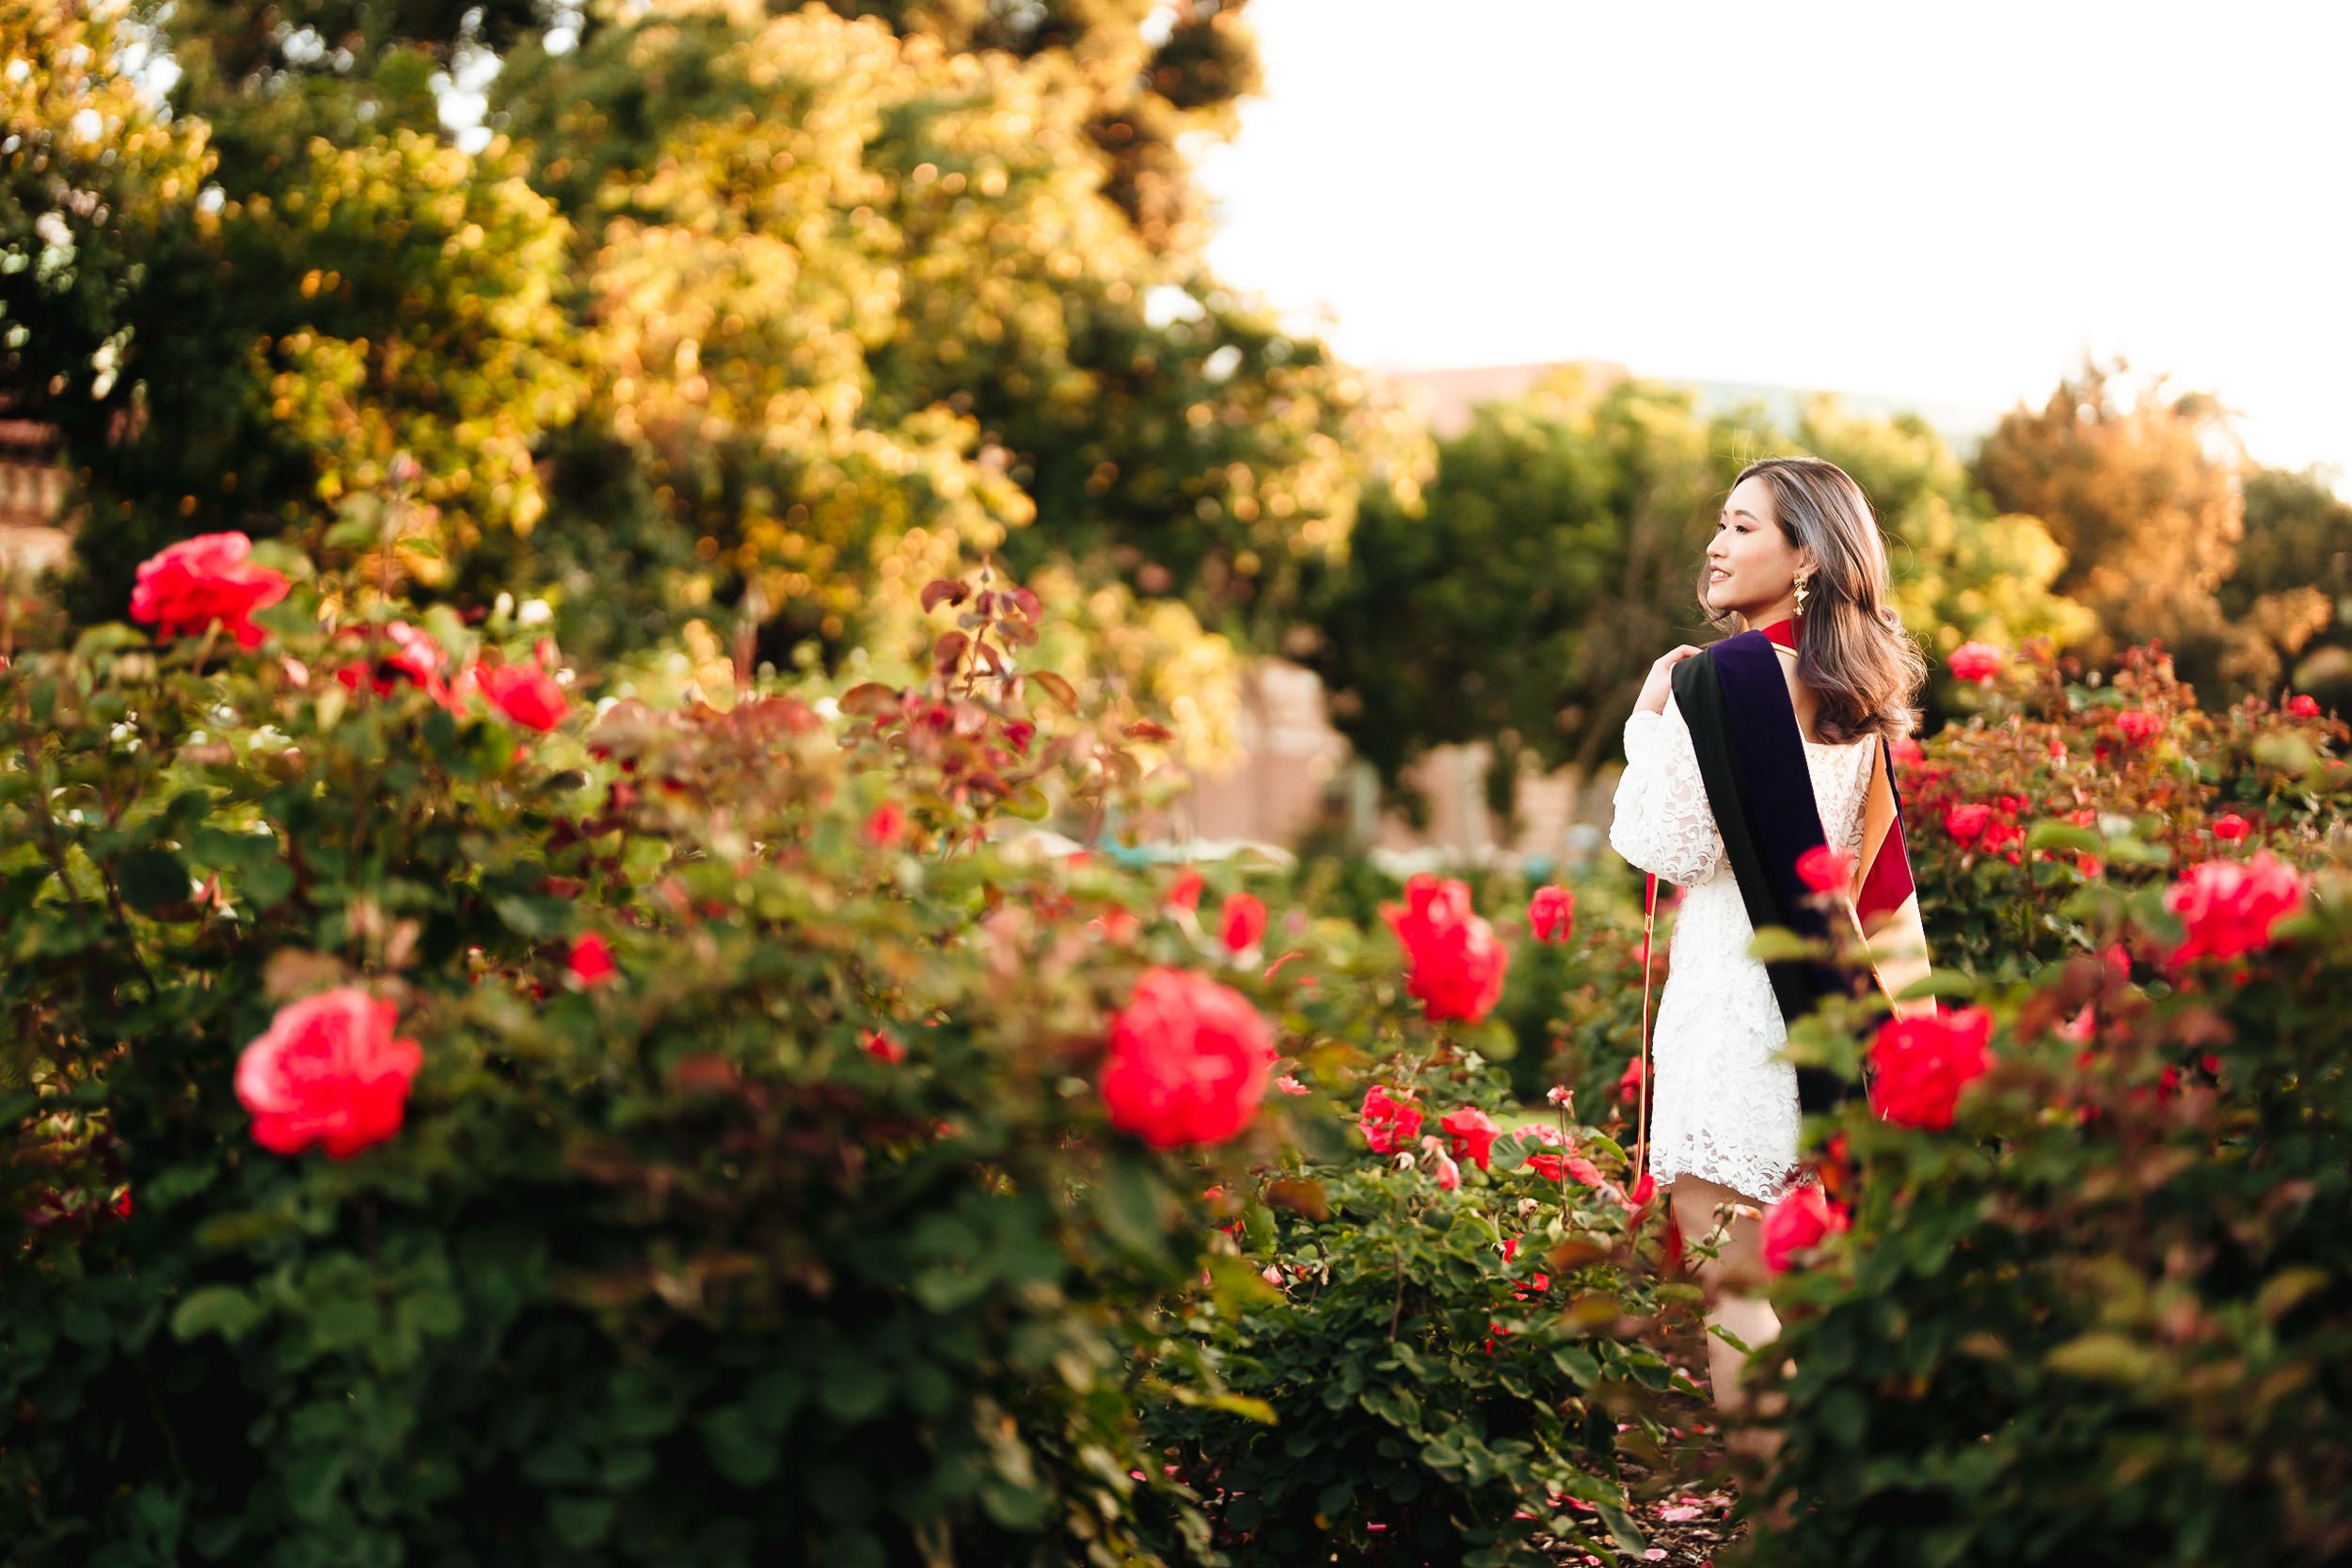 Dreamy graduation portrait at USC Rose Garden at sunset